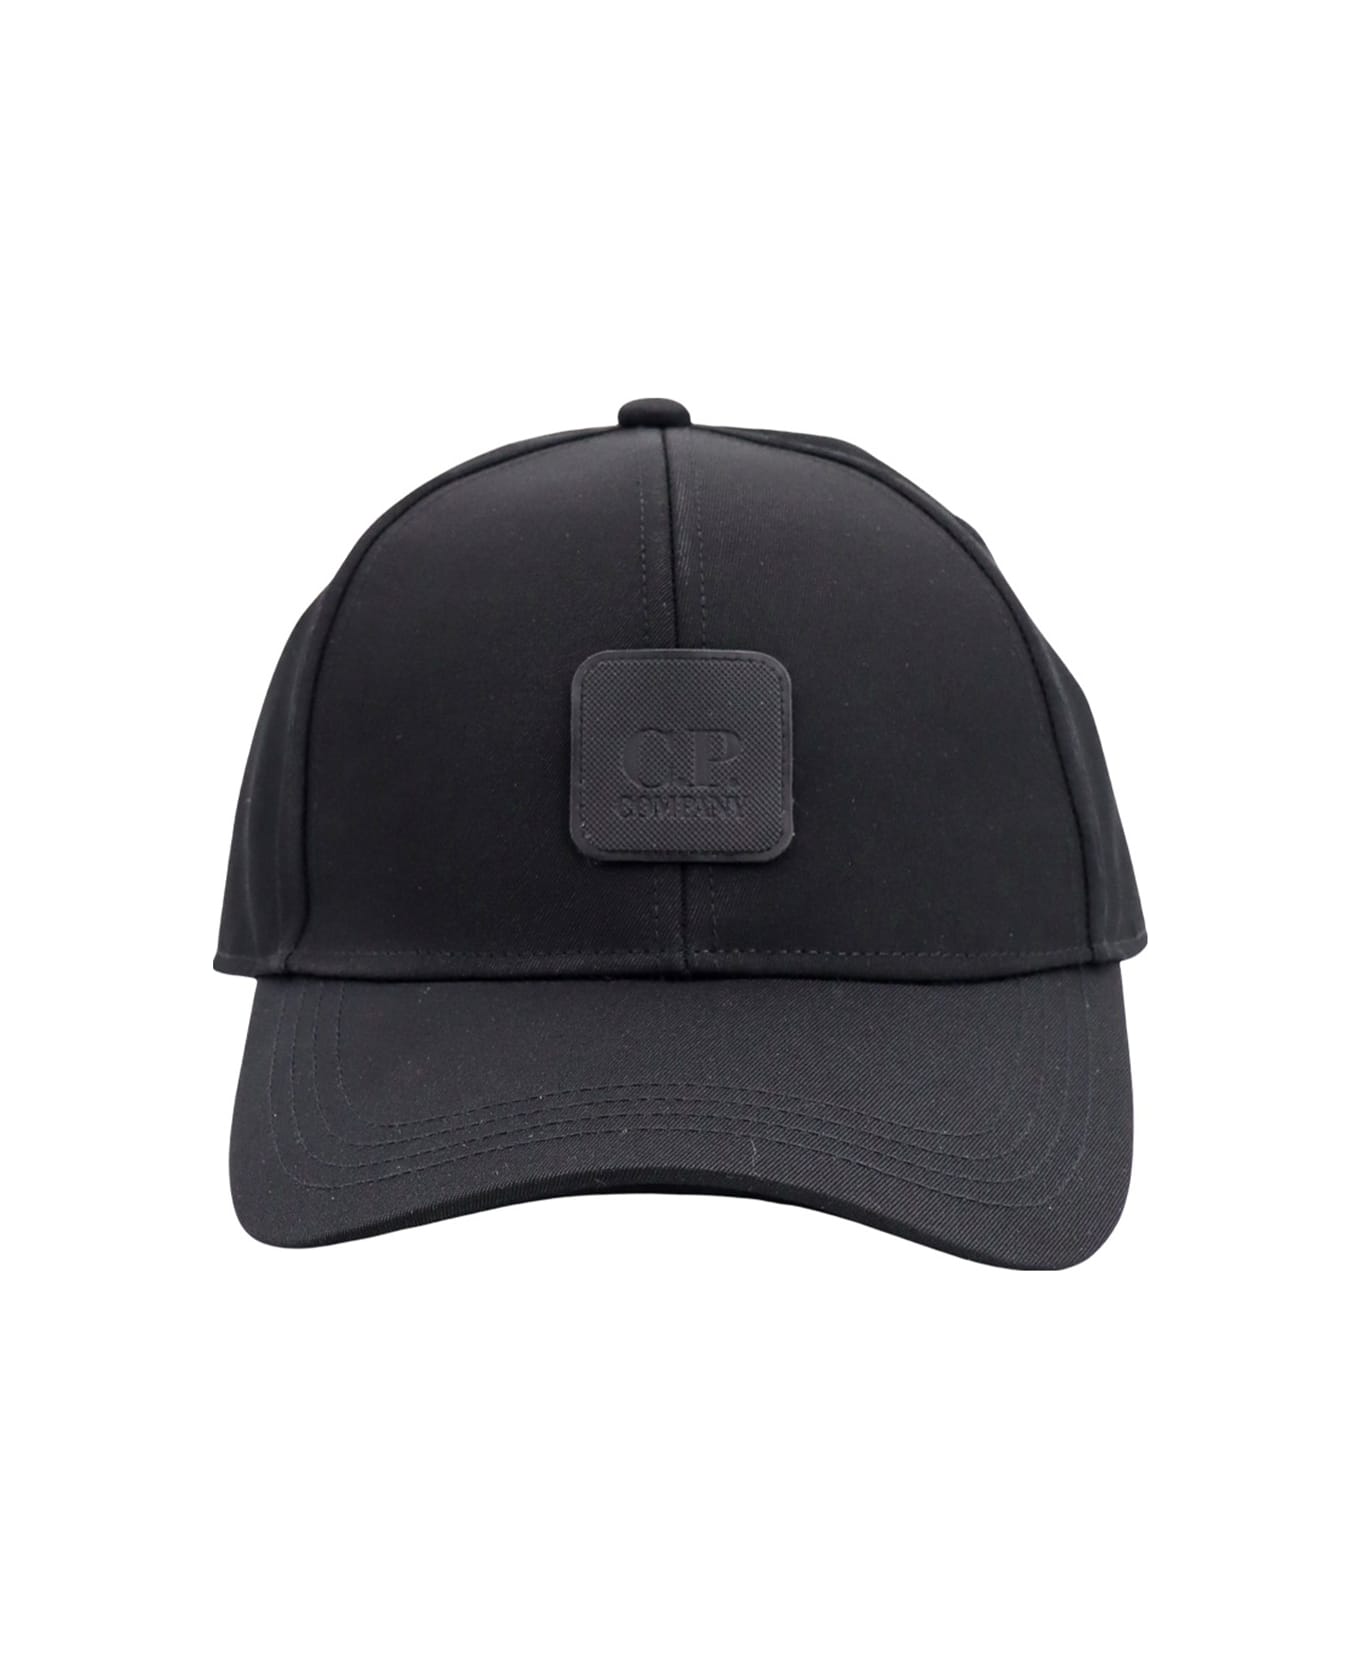 C.P. Company Hat - Black 帽子